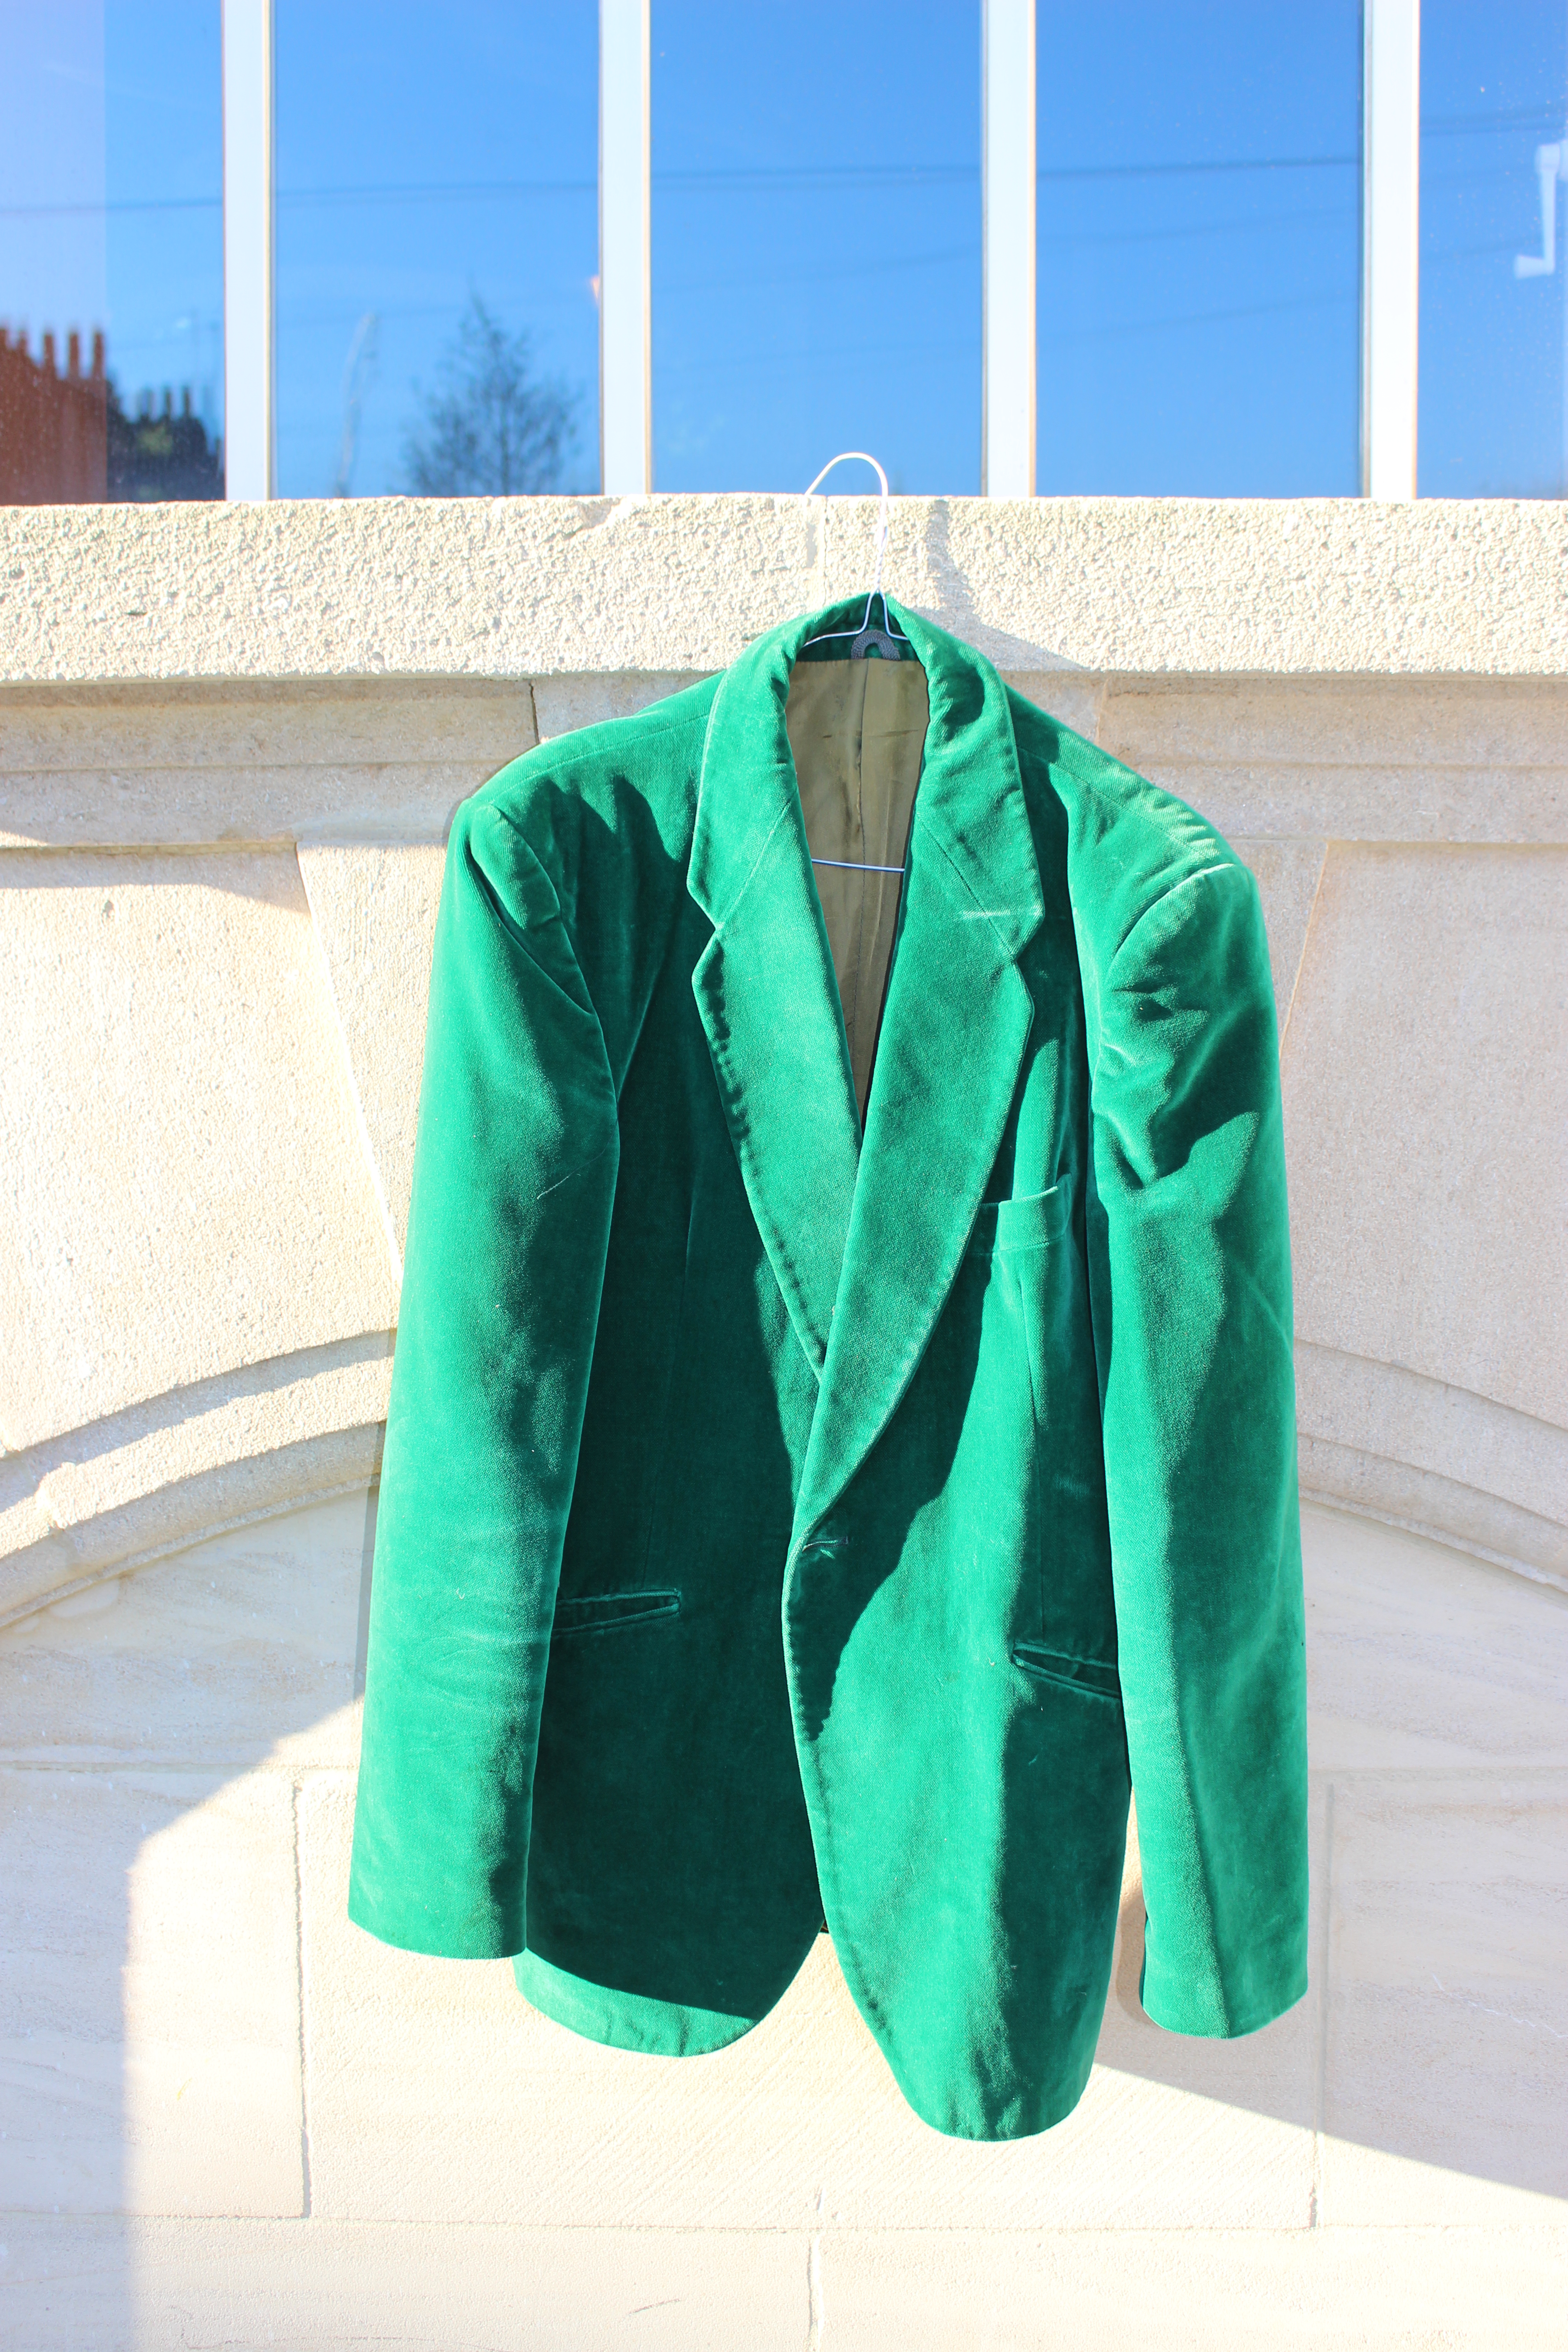 His lordship green velvet jacket, from Unicorn, 5 Ship Street, Oxford